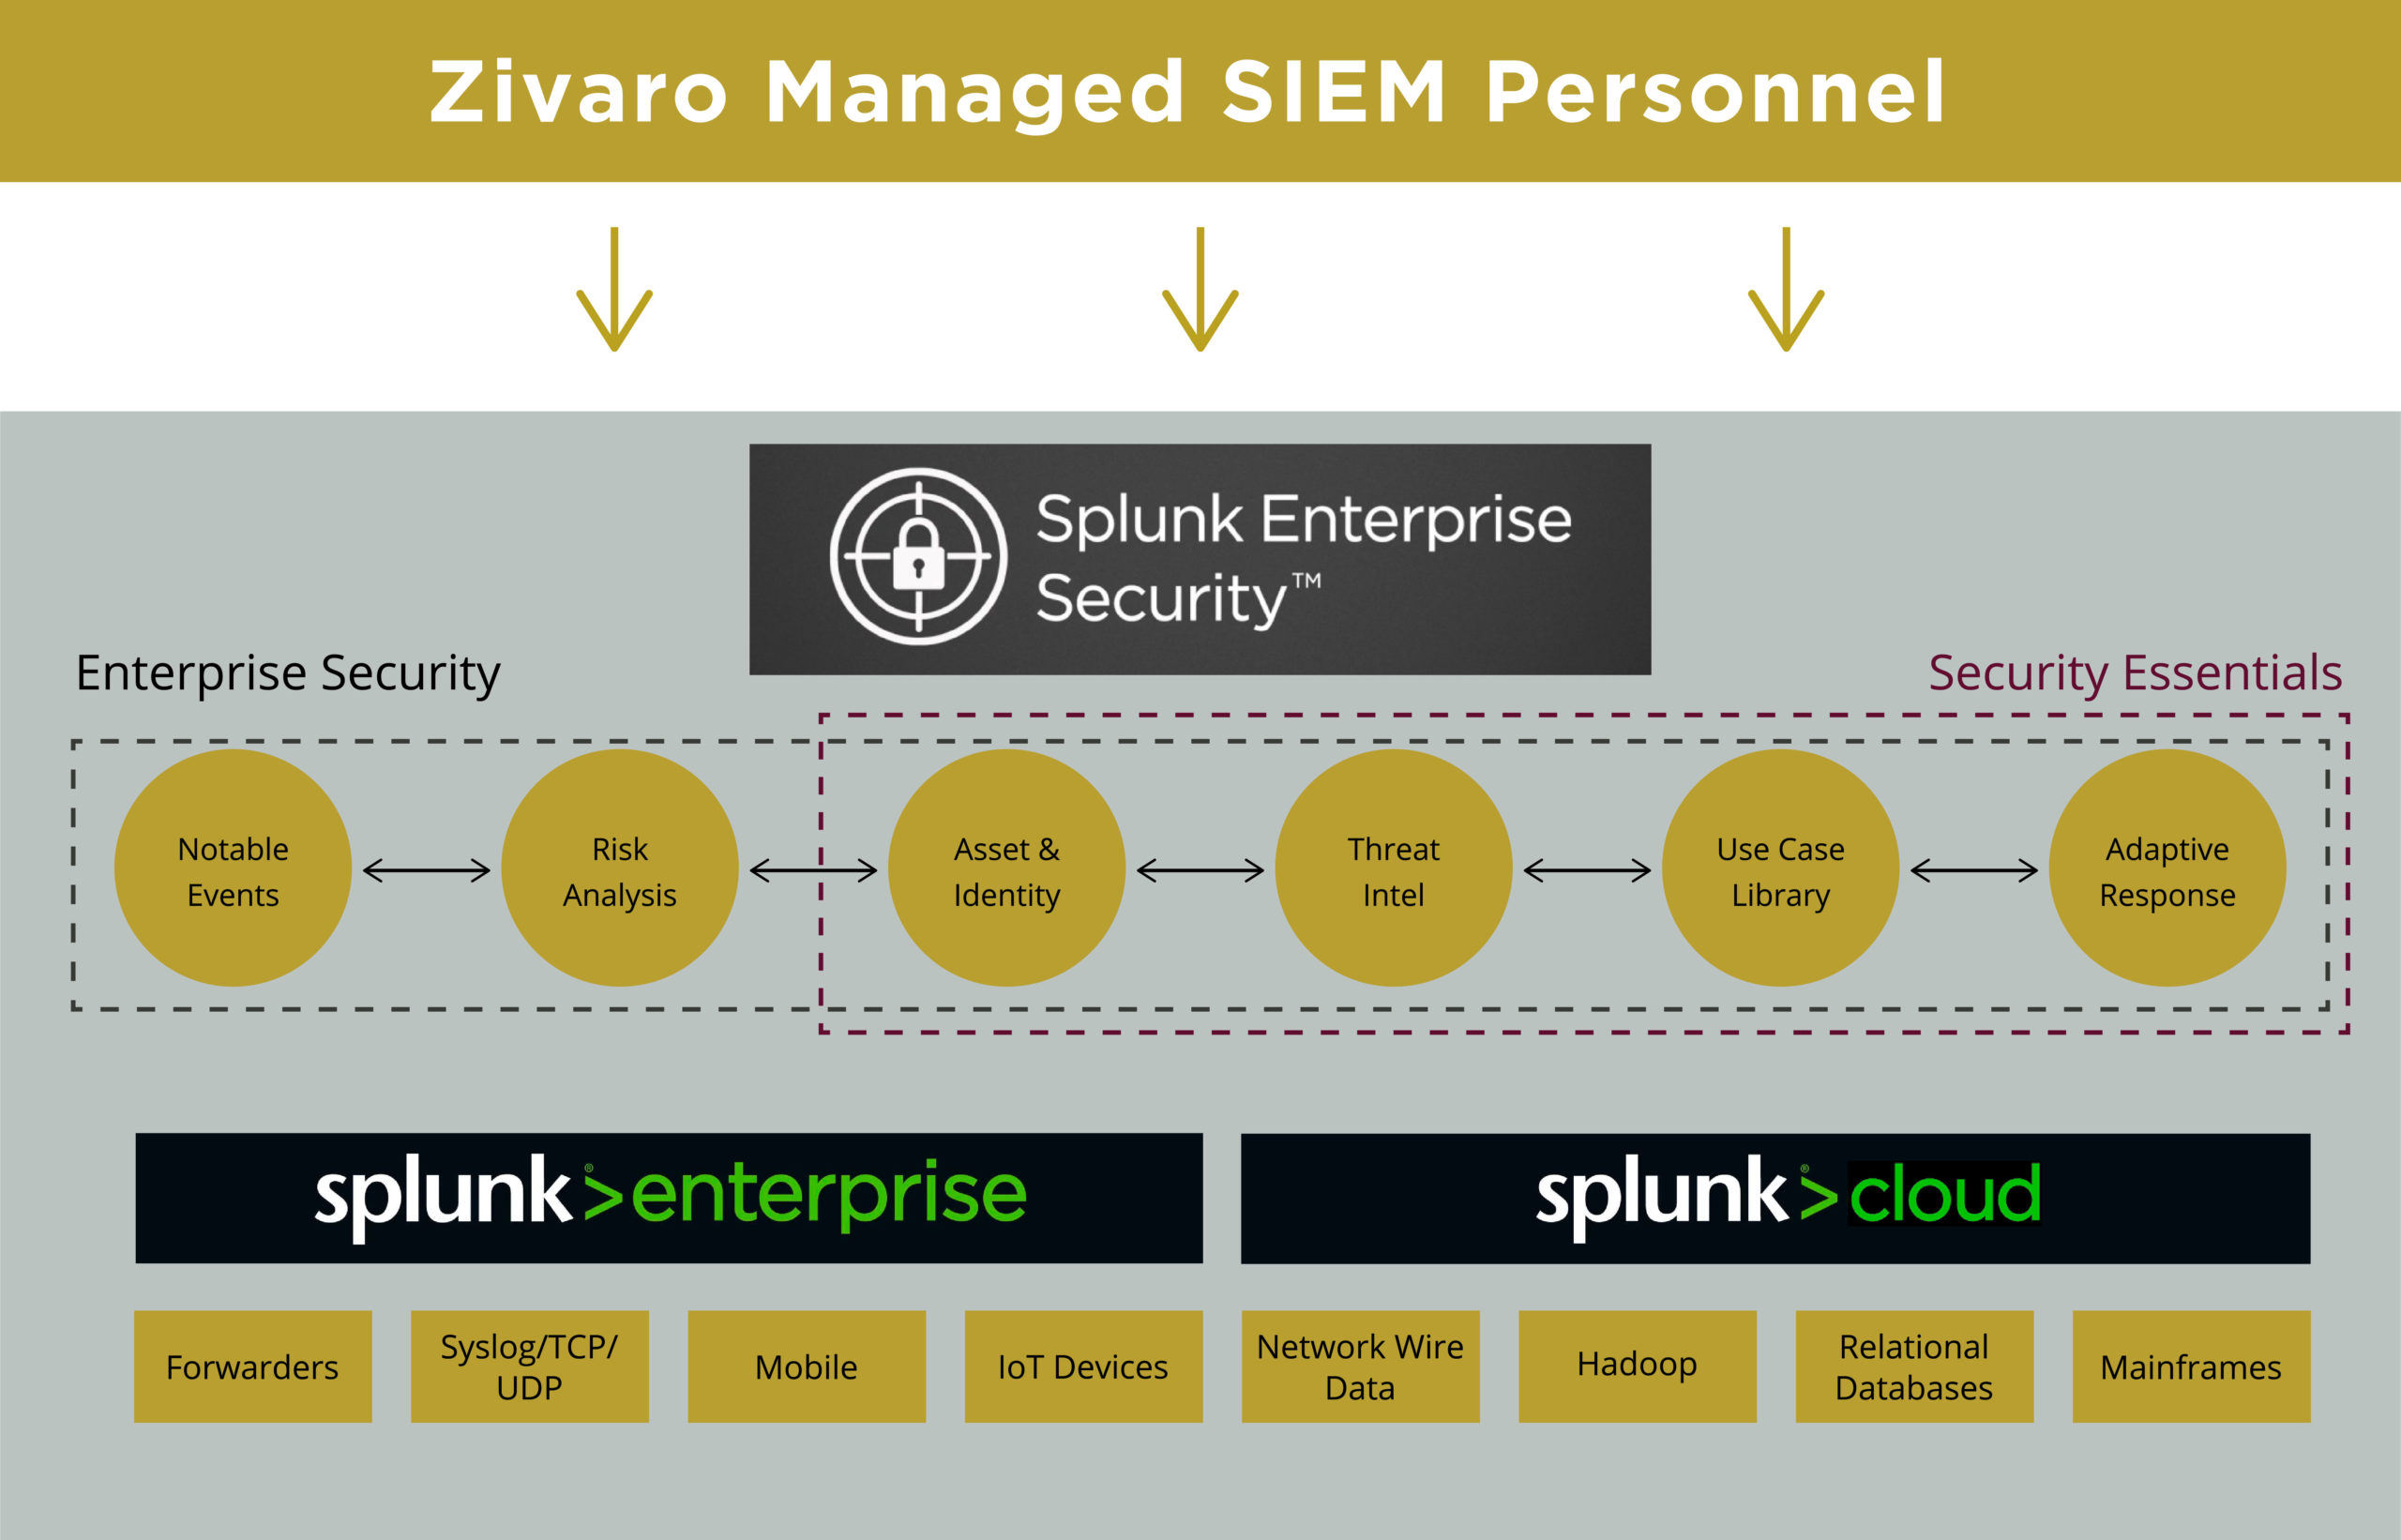 Mapped Illustration of Zivaro Managed SIEM Personnel with Splunk>enterprise & splunk>cloud